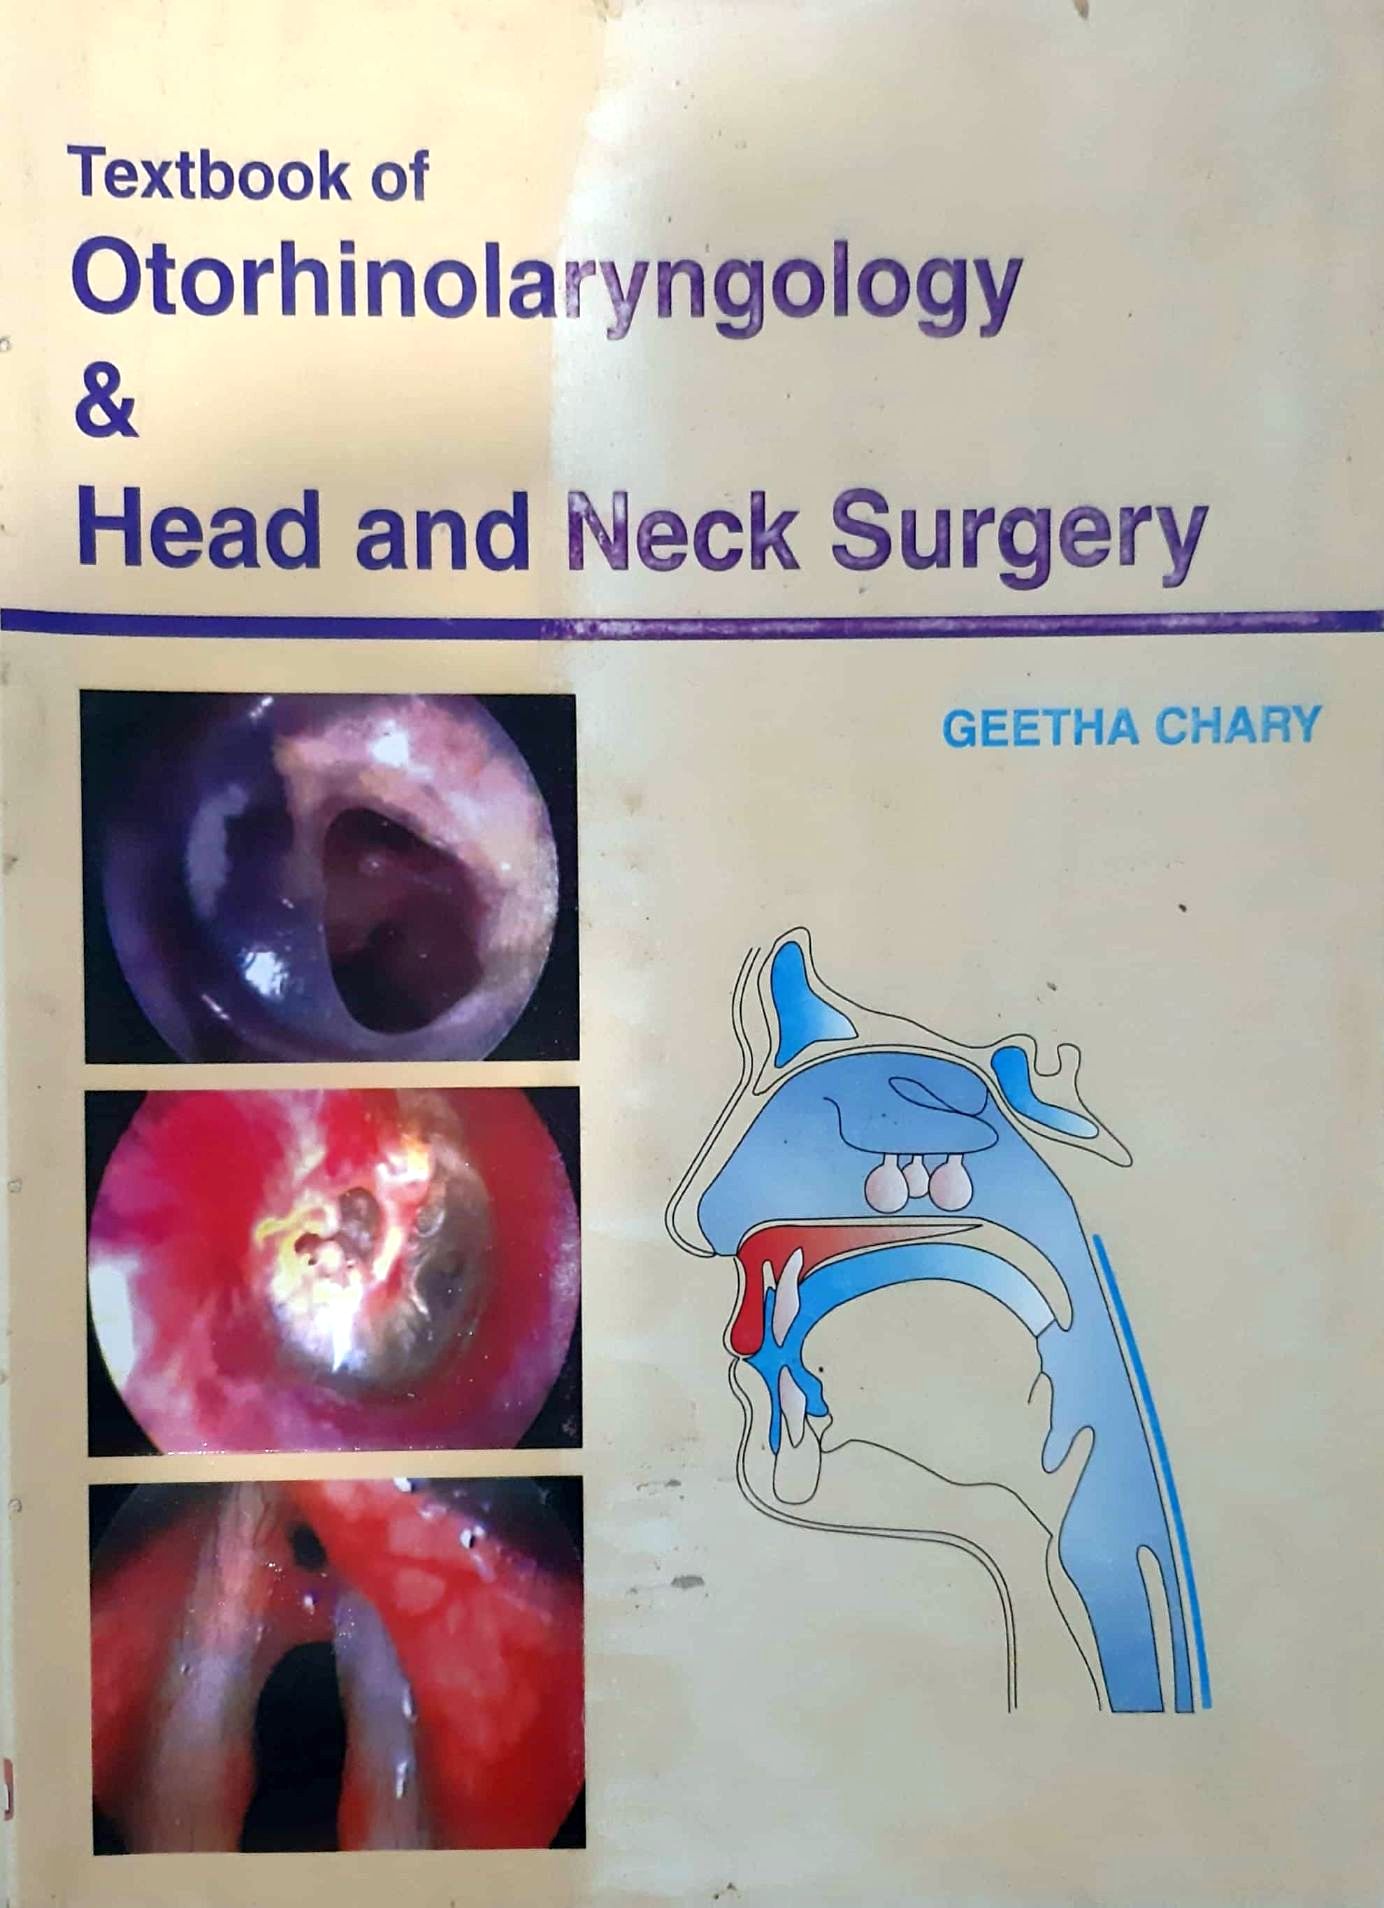 

mbbs/4-year/textbook-of-otorhinolaryngology-head-and-neck-surgery-9789380316079